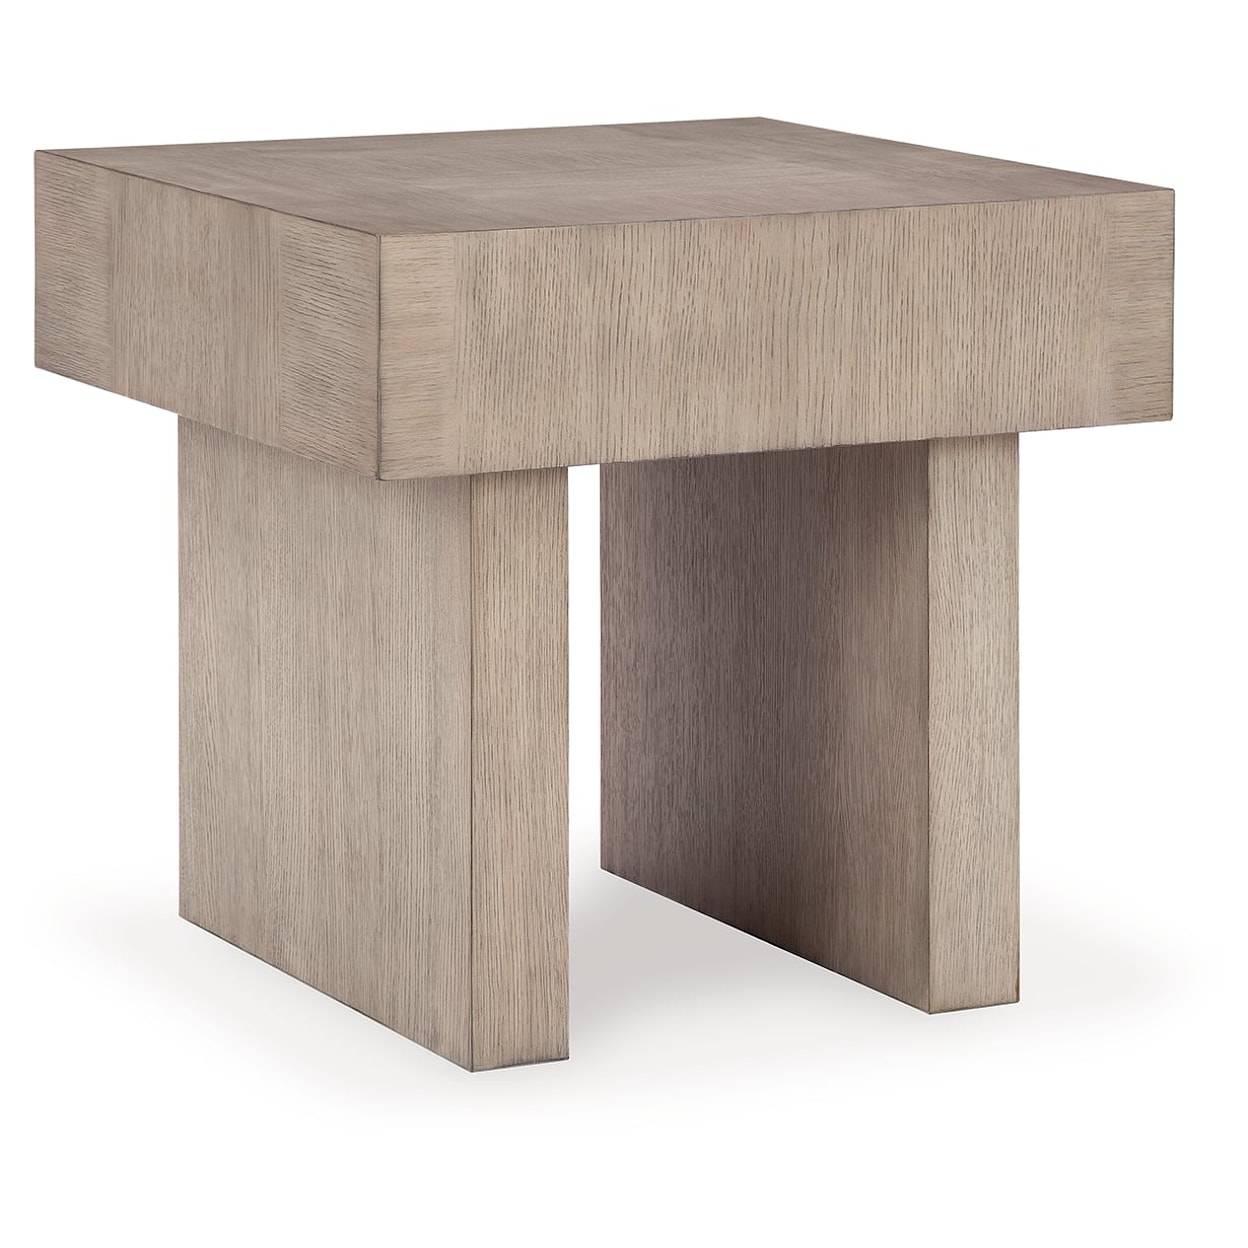 Ashley Furniture Signature Design Jorlaina Square End Table